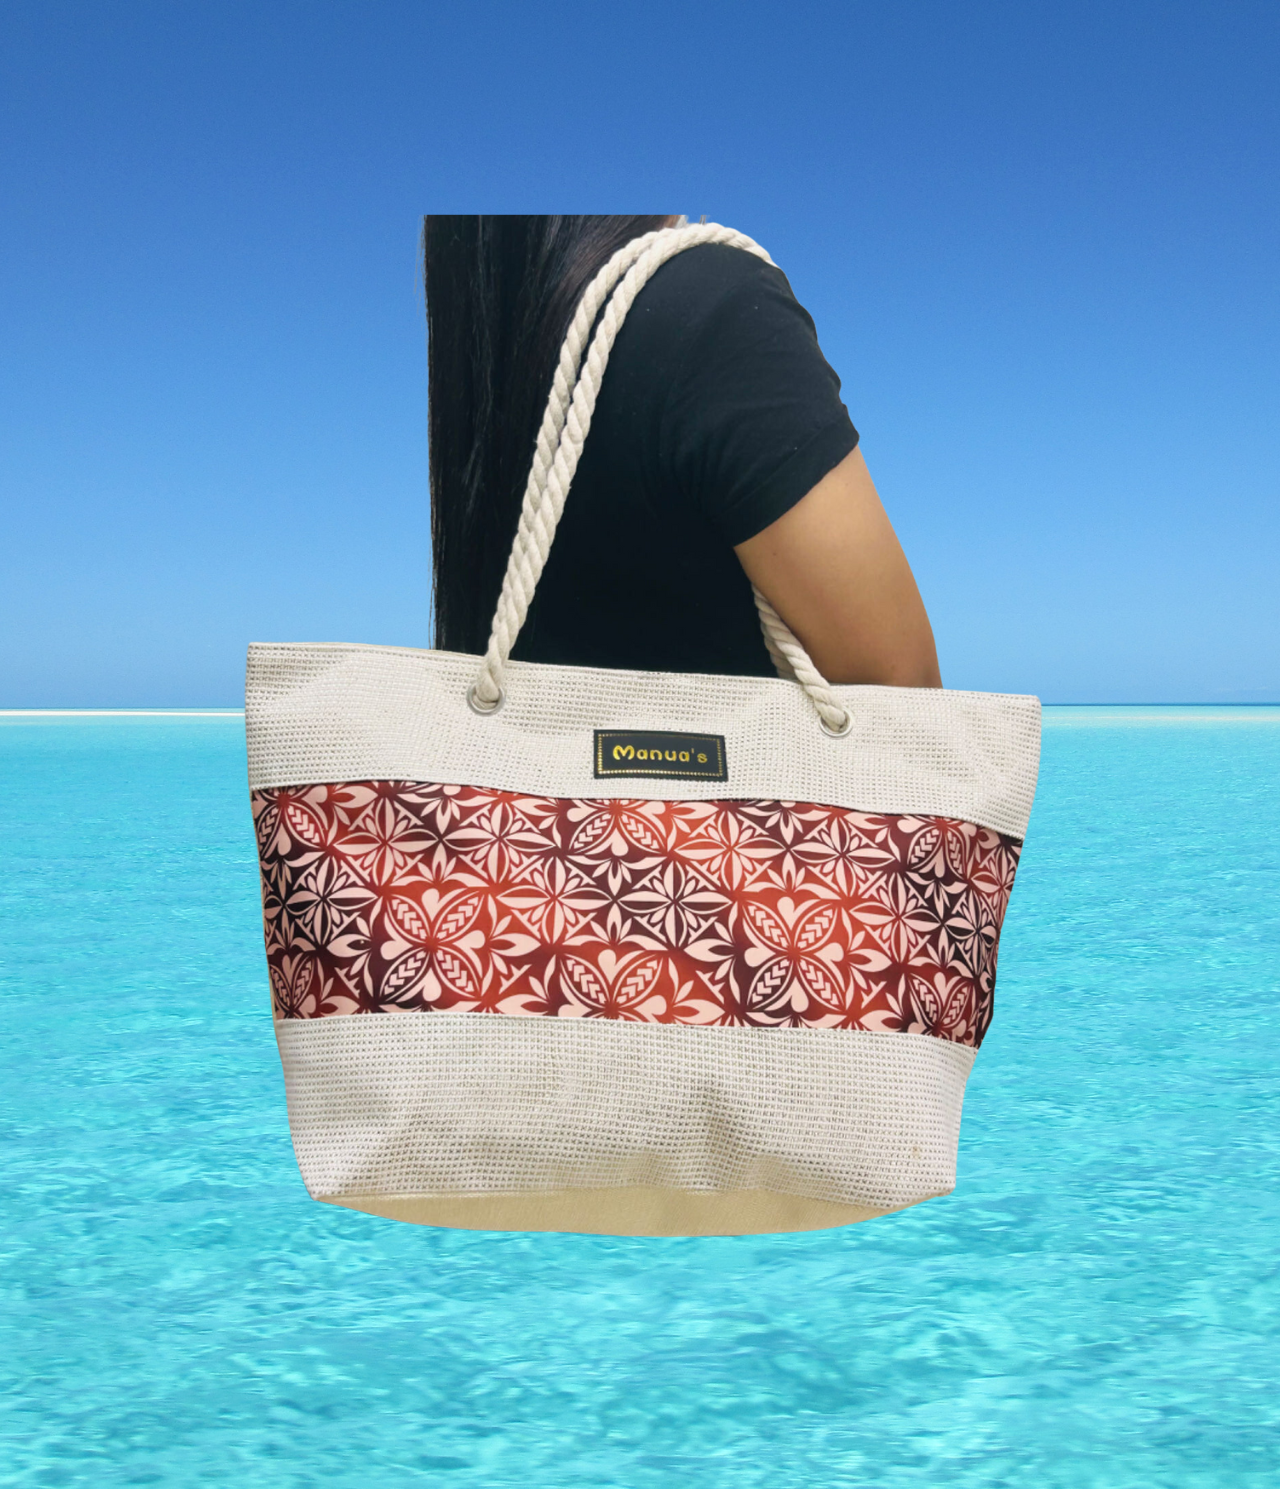 Samoan Design Tote Bag- Rust & Cream Color